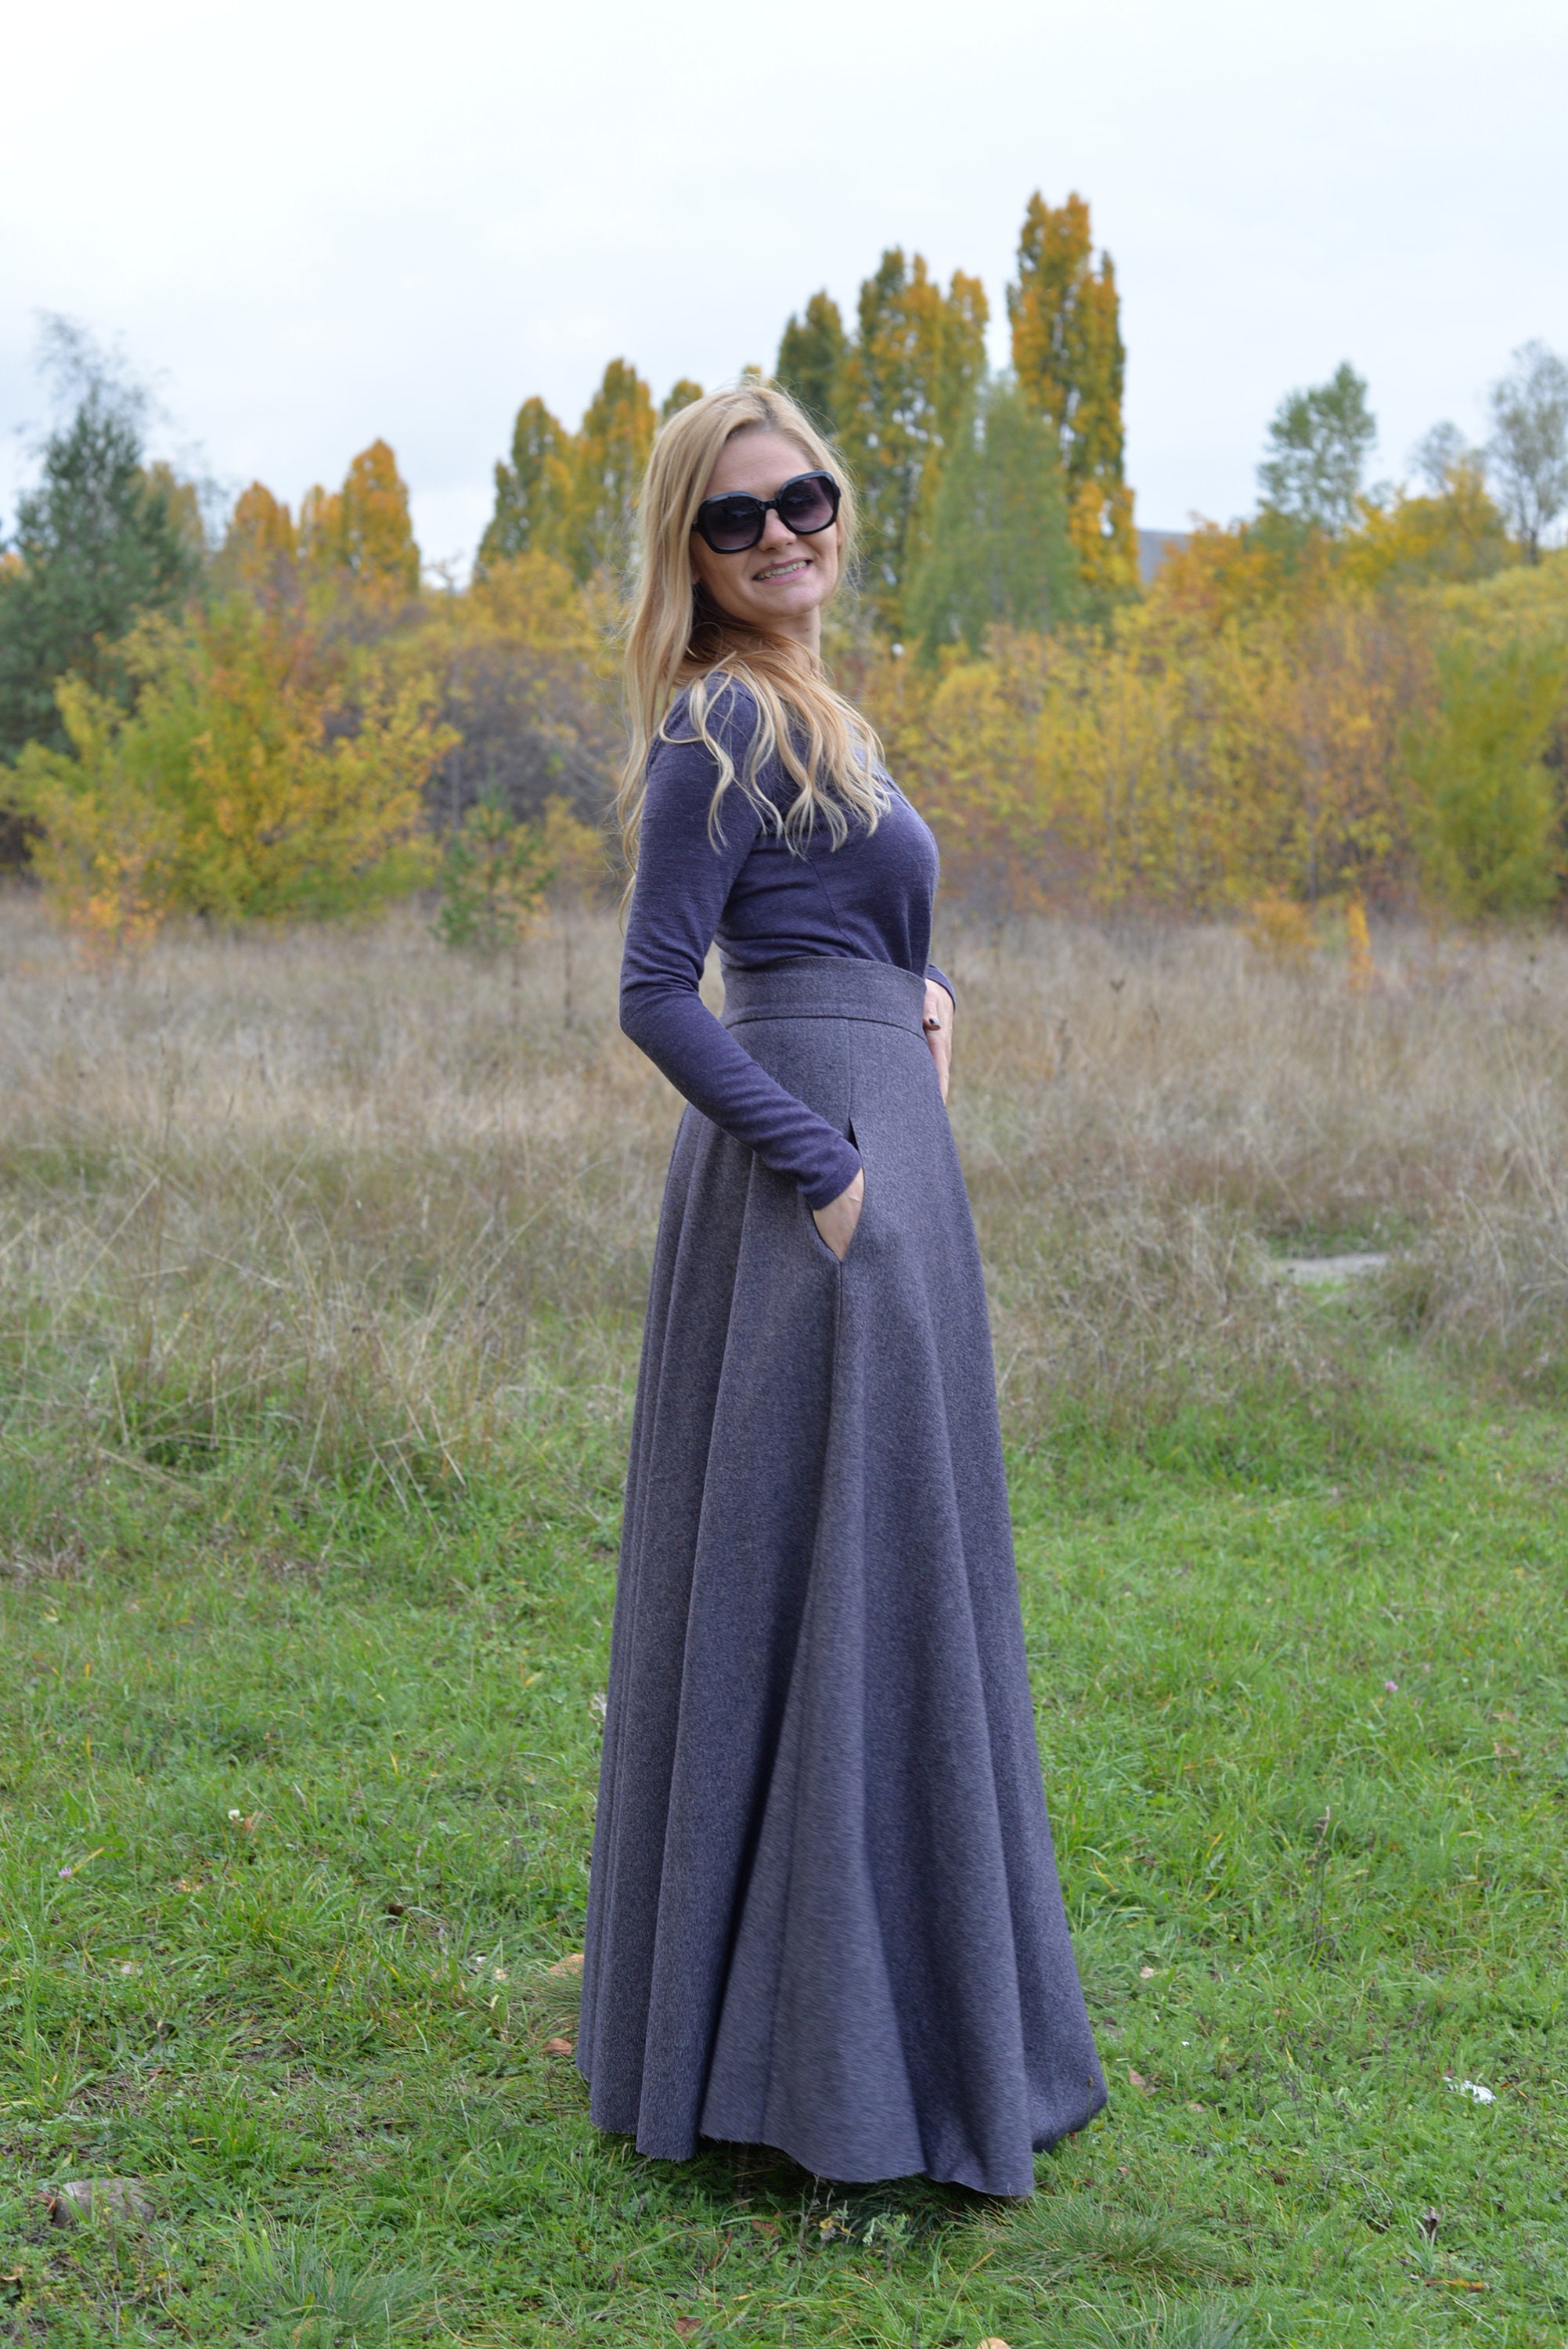 Wool Maxi Skirt Long Plus Size Clothing Winter High Waist - Etsy